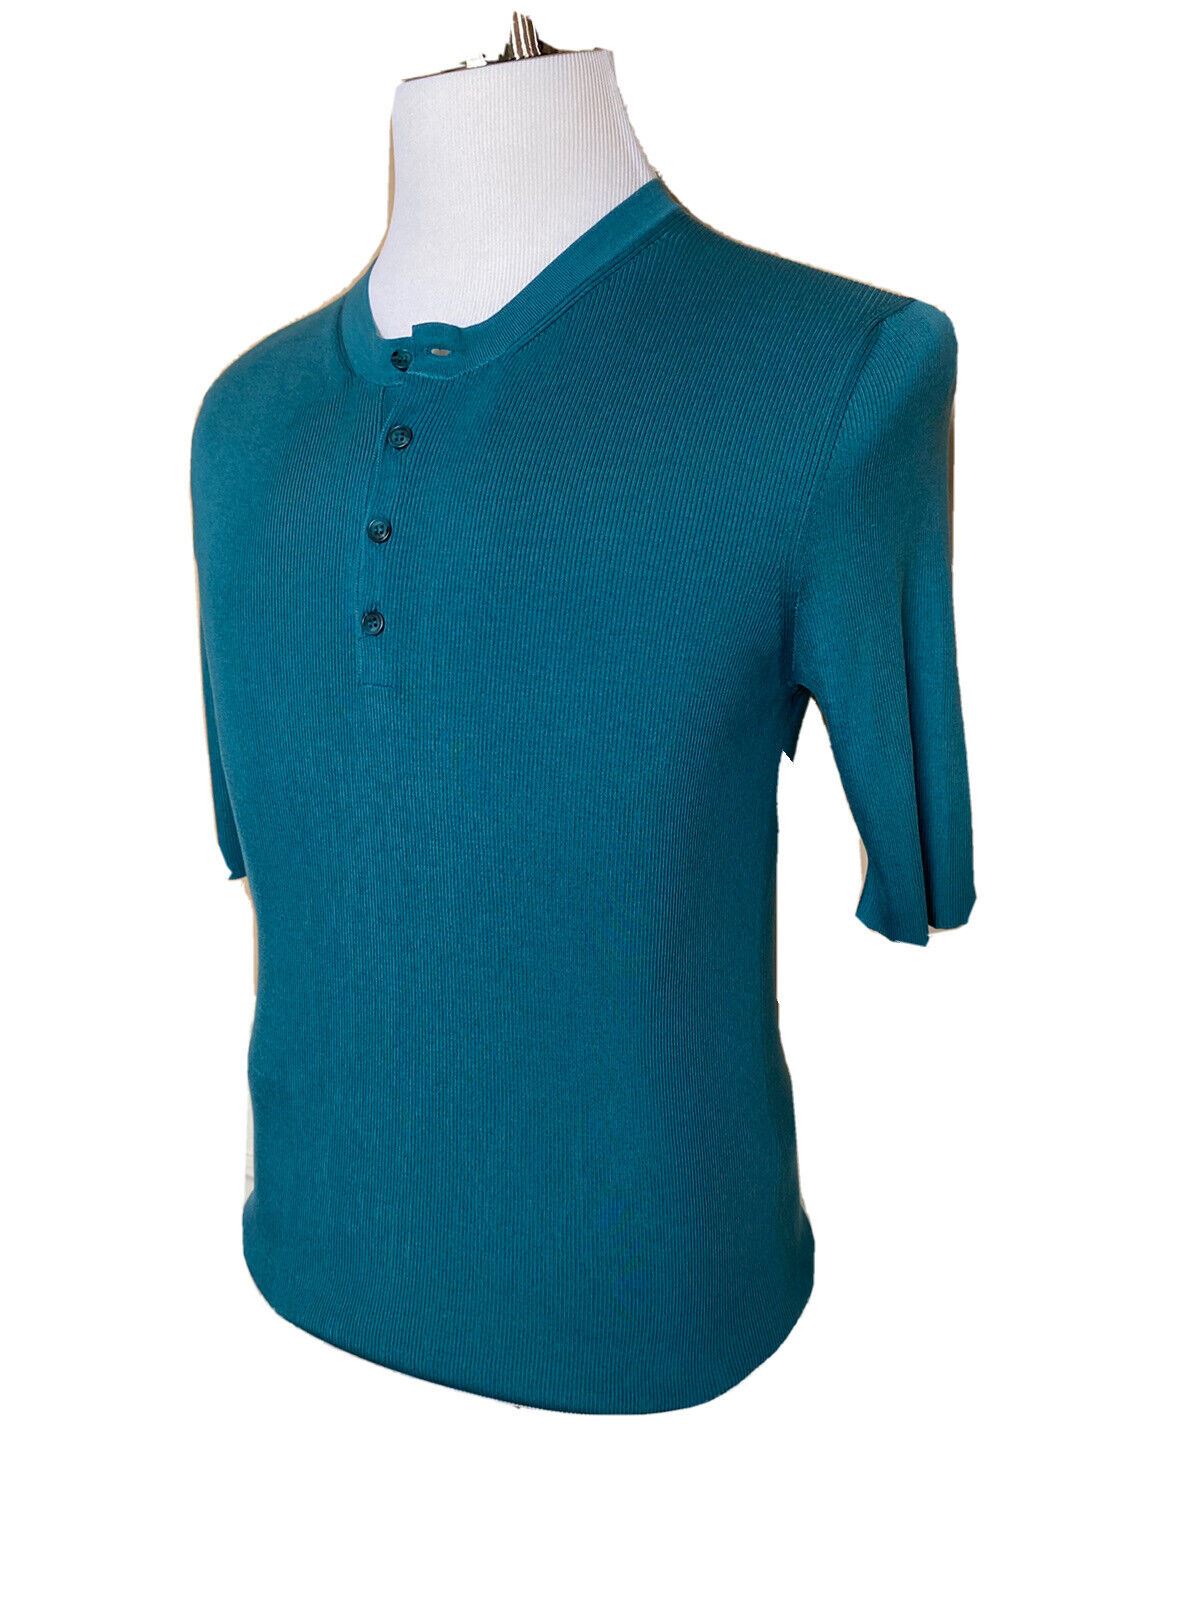 NWT 995 $ Dolce&amp;Gabbana Seiden-Henley-Hemd mit kurzen Ärmeln, Blaugrün, 44 US (54 Euro) Italien 